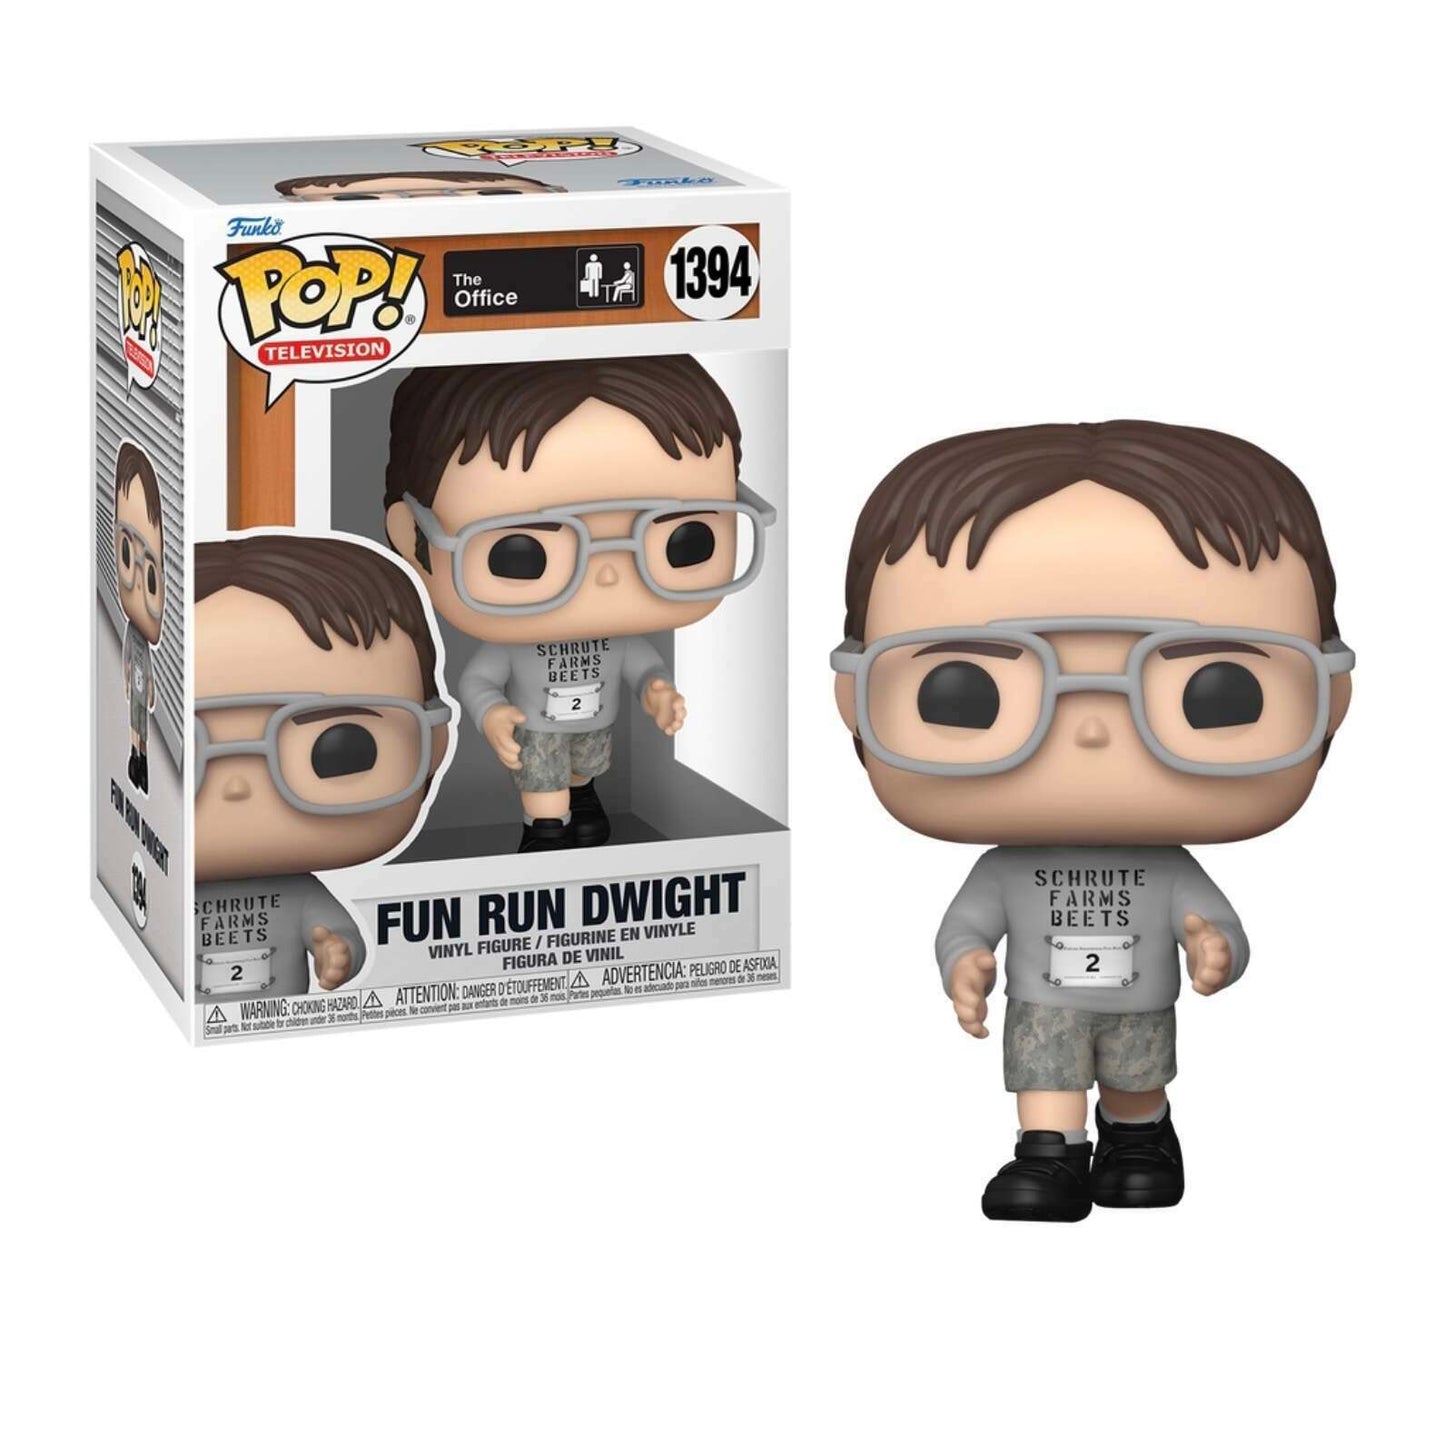 The Office - Fun Run Dwight #1394 - Funko Pop! Vinyl Figure (Television)